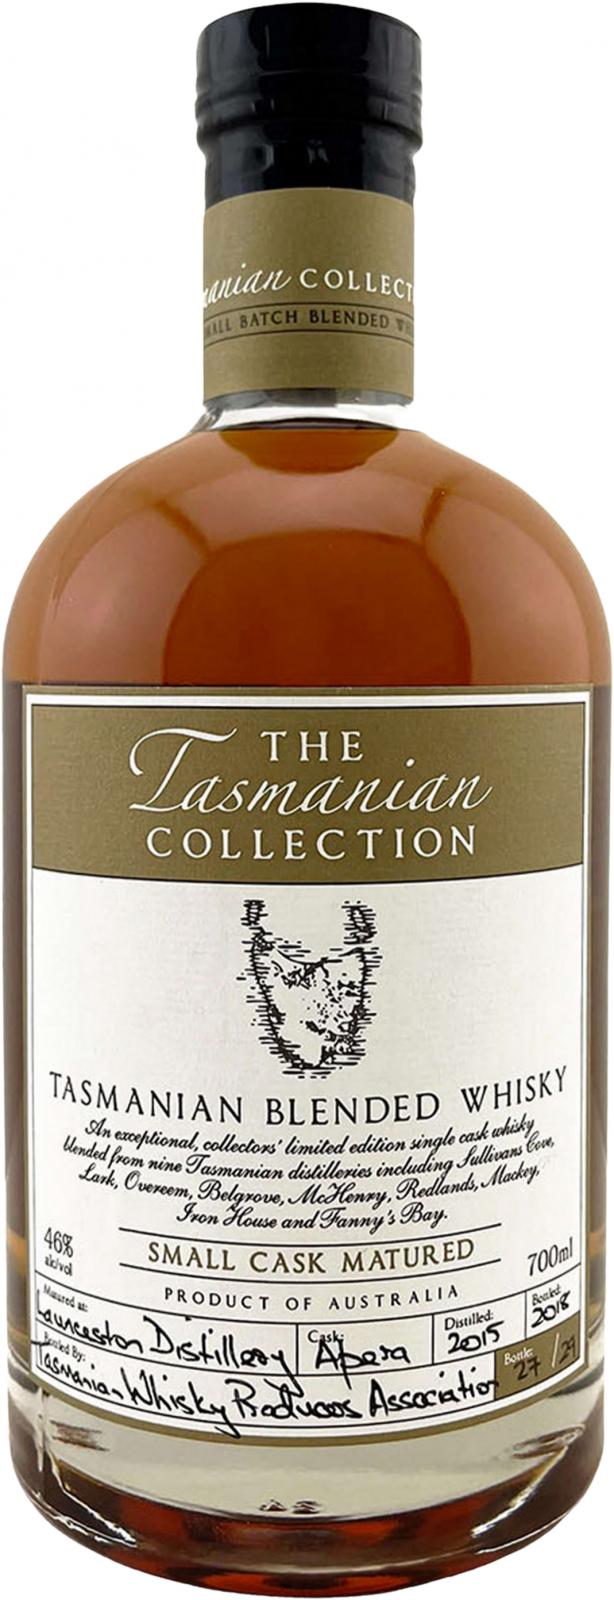 The Tasmanian Collection 2015